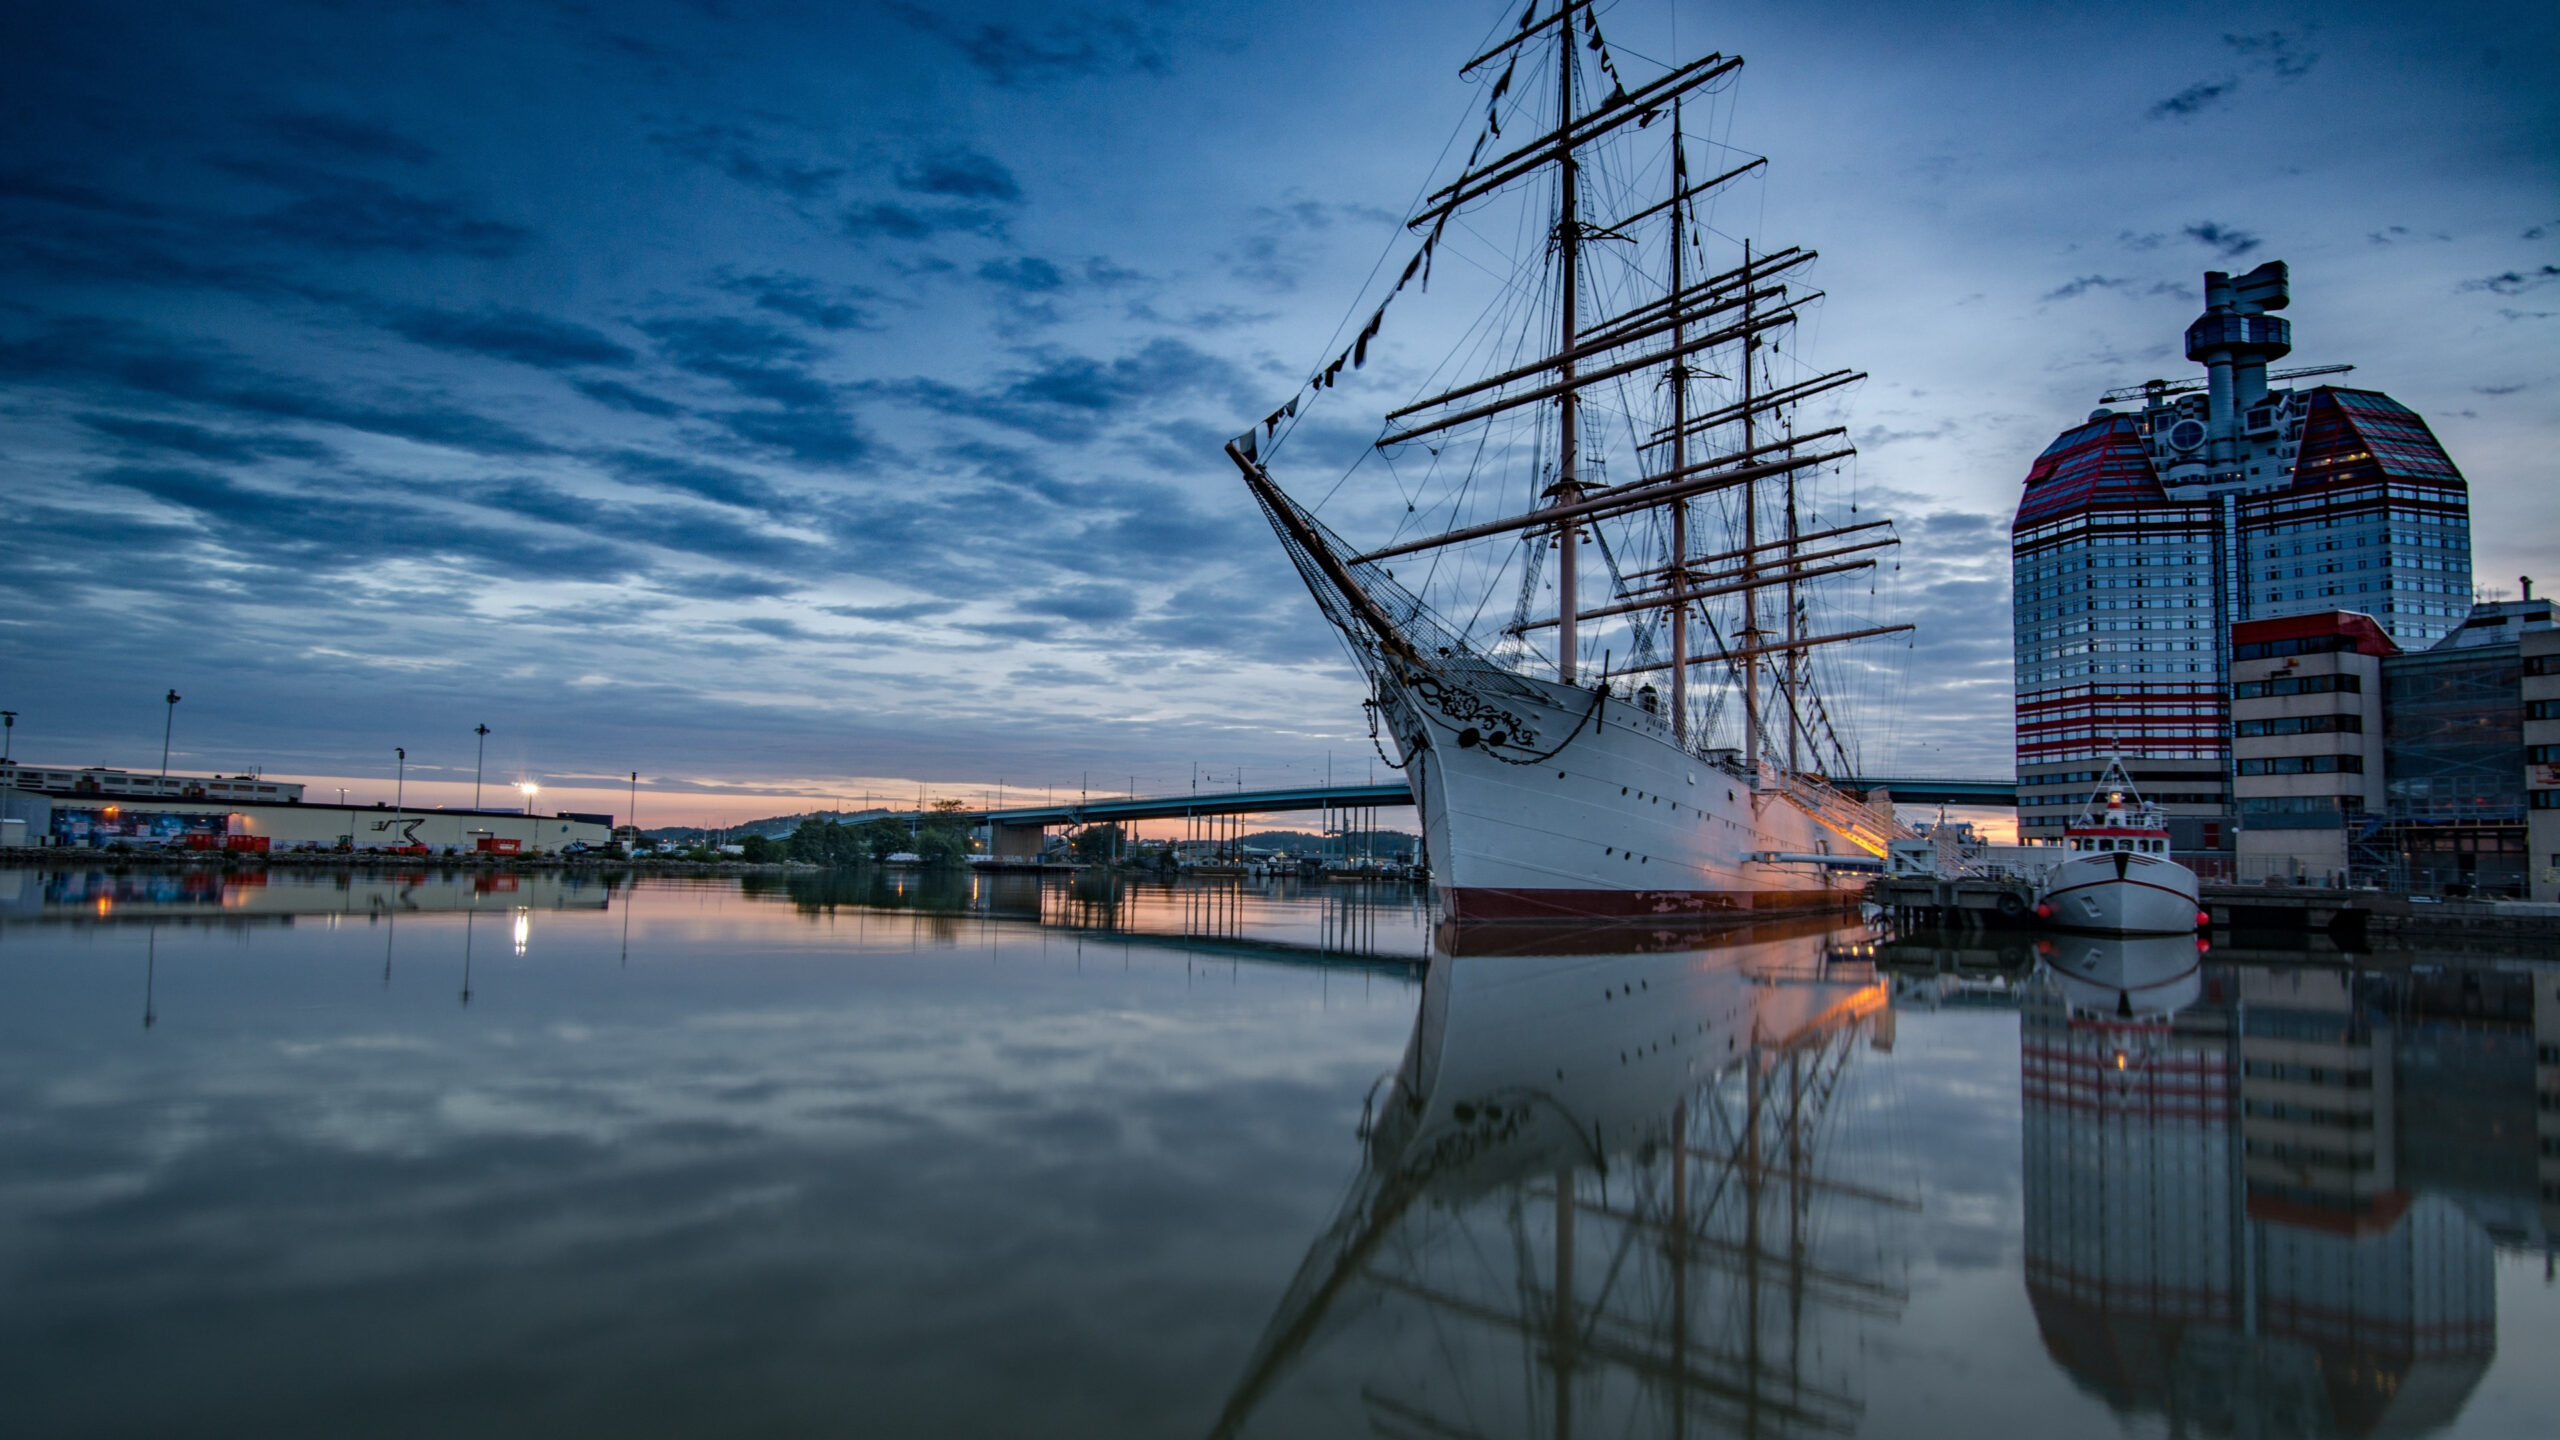 Download wallpaper Historic wooden sailing ship in Gothenburg